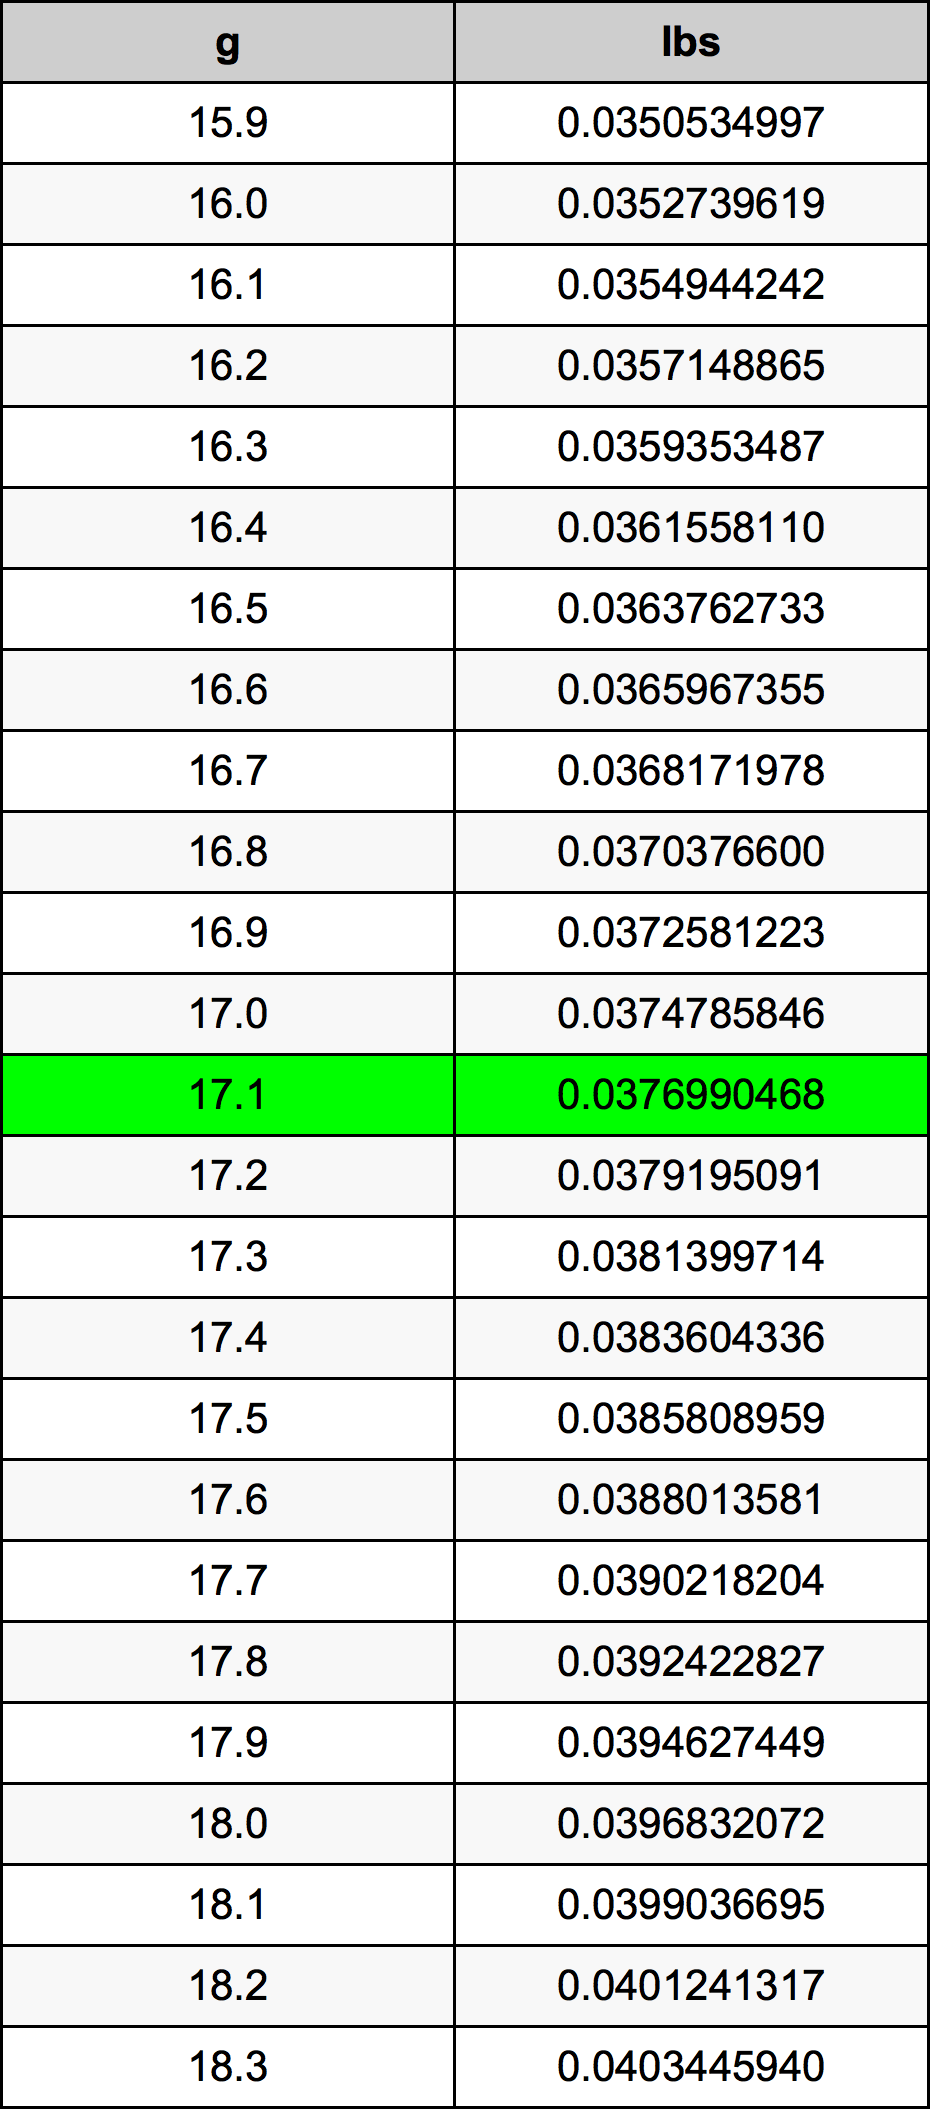 17.1 غرام جدول تحويل